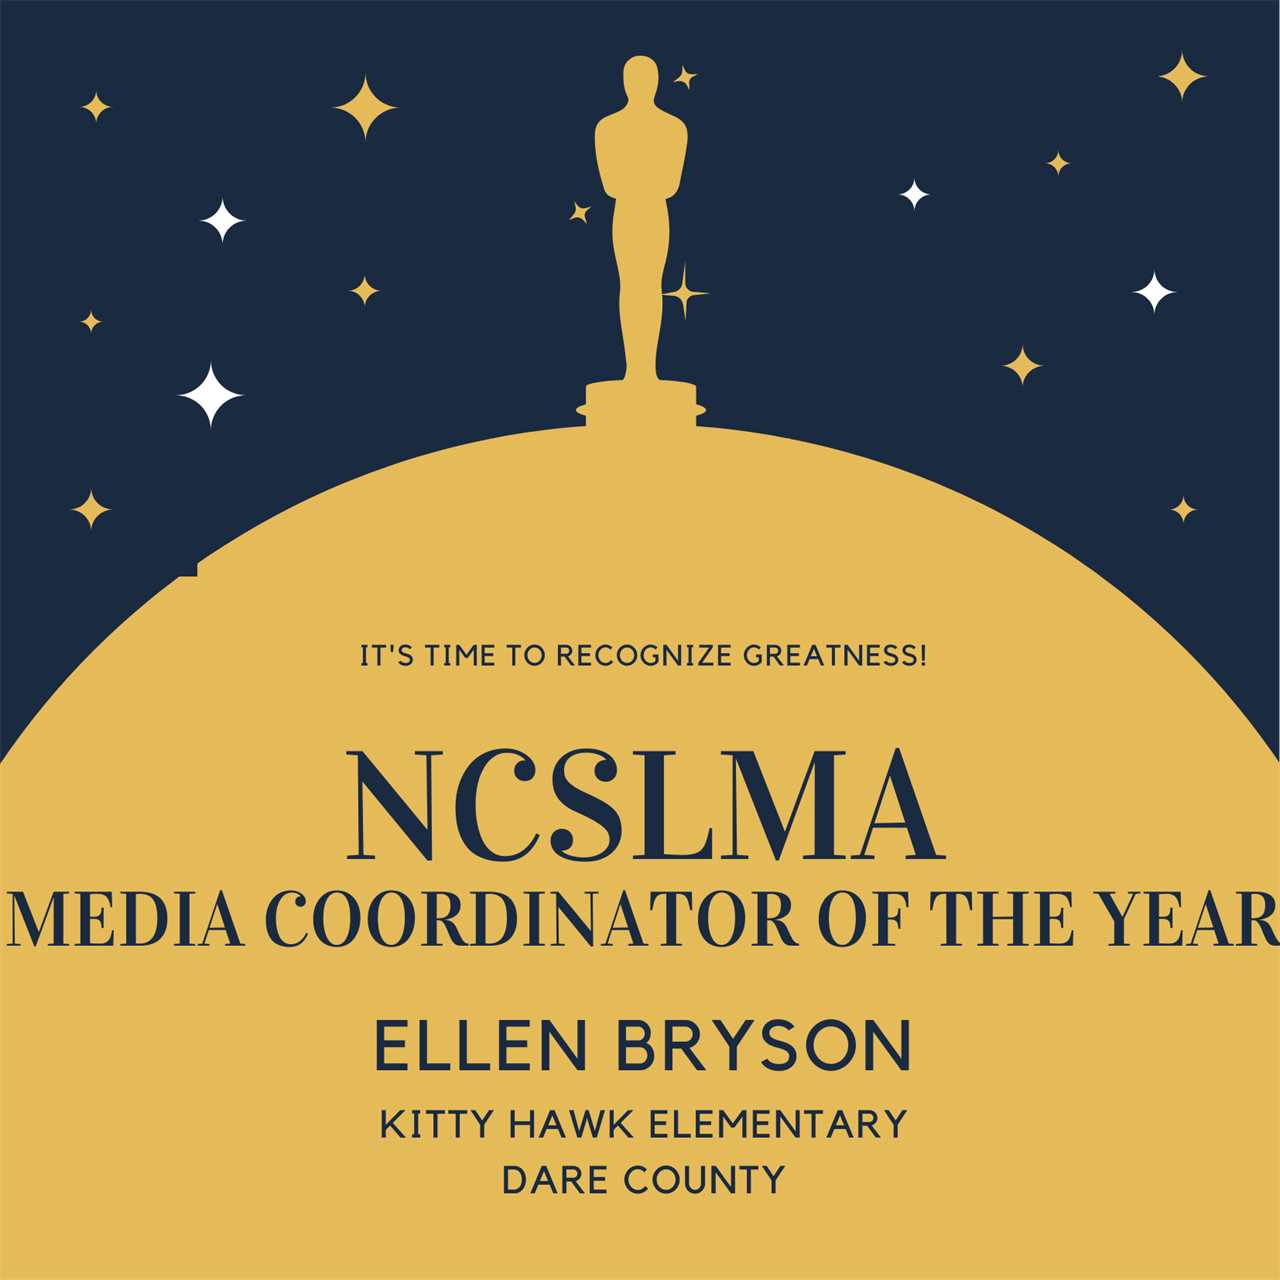 Congratulations to Ellen Bryson at Kitty Hawk Elementary, the NCSLMA 2021-22 Media Coordinator of the Year